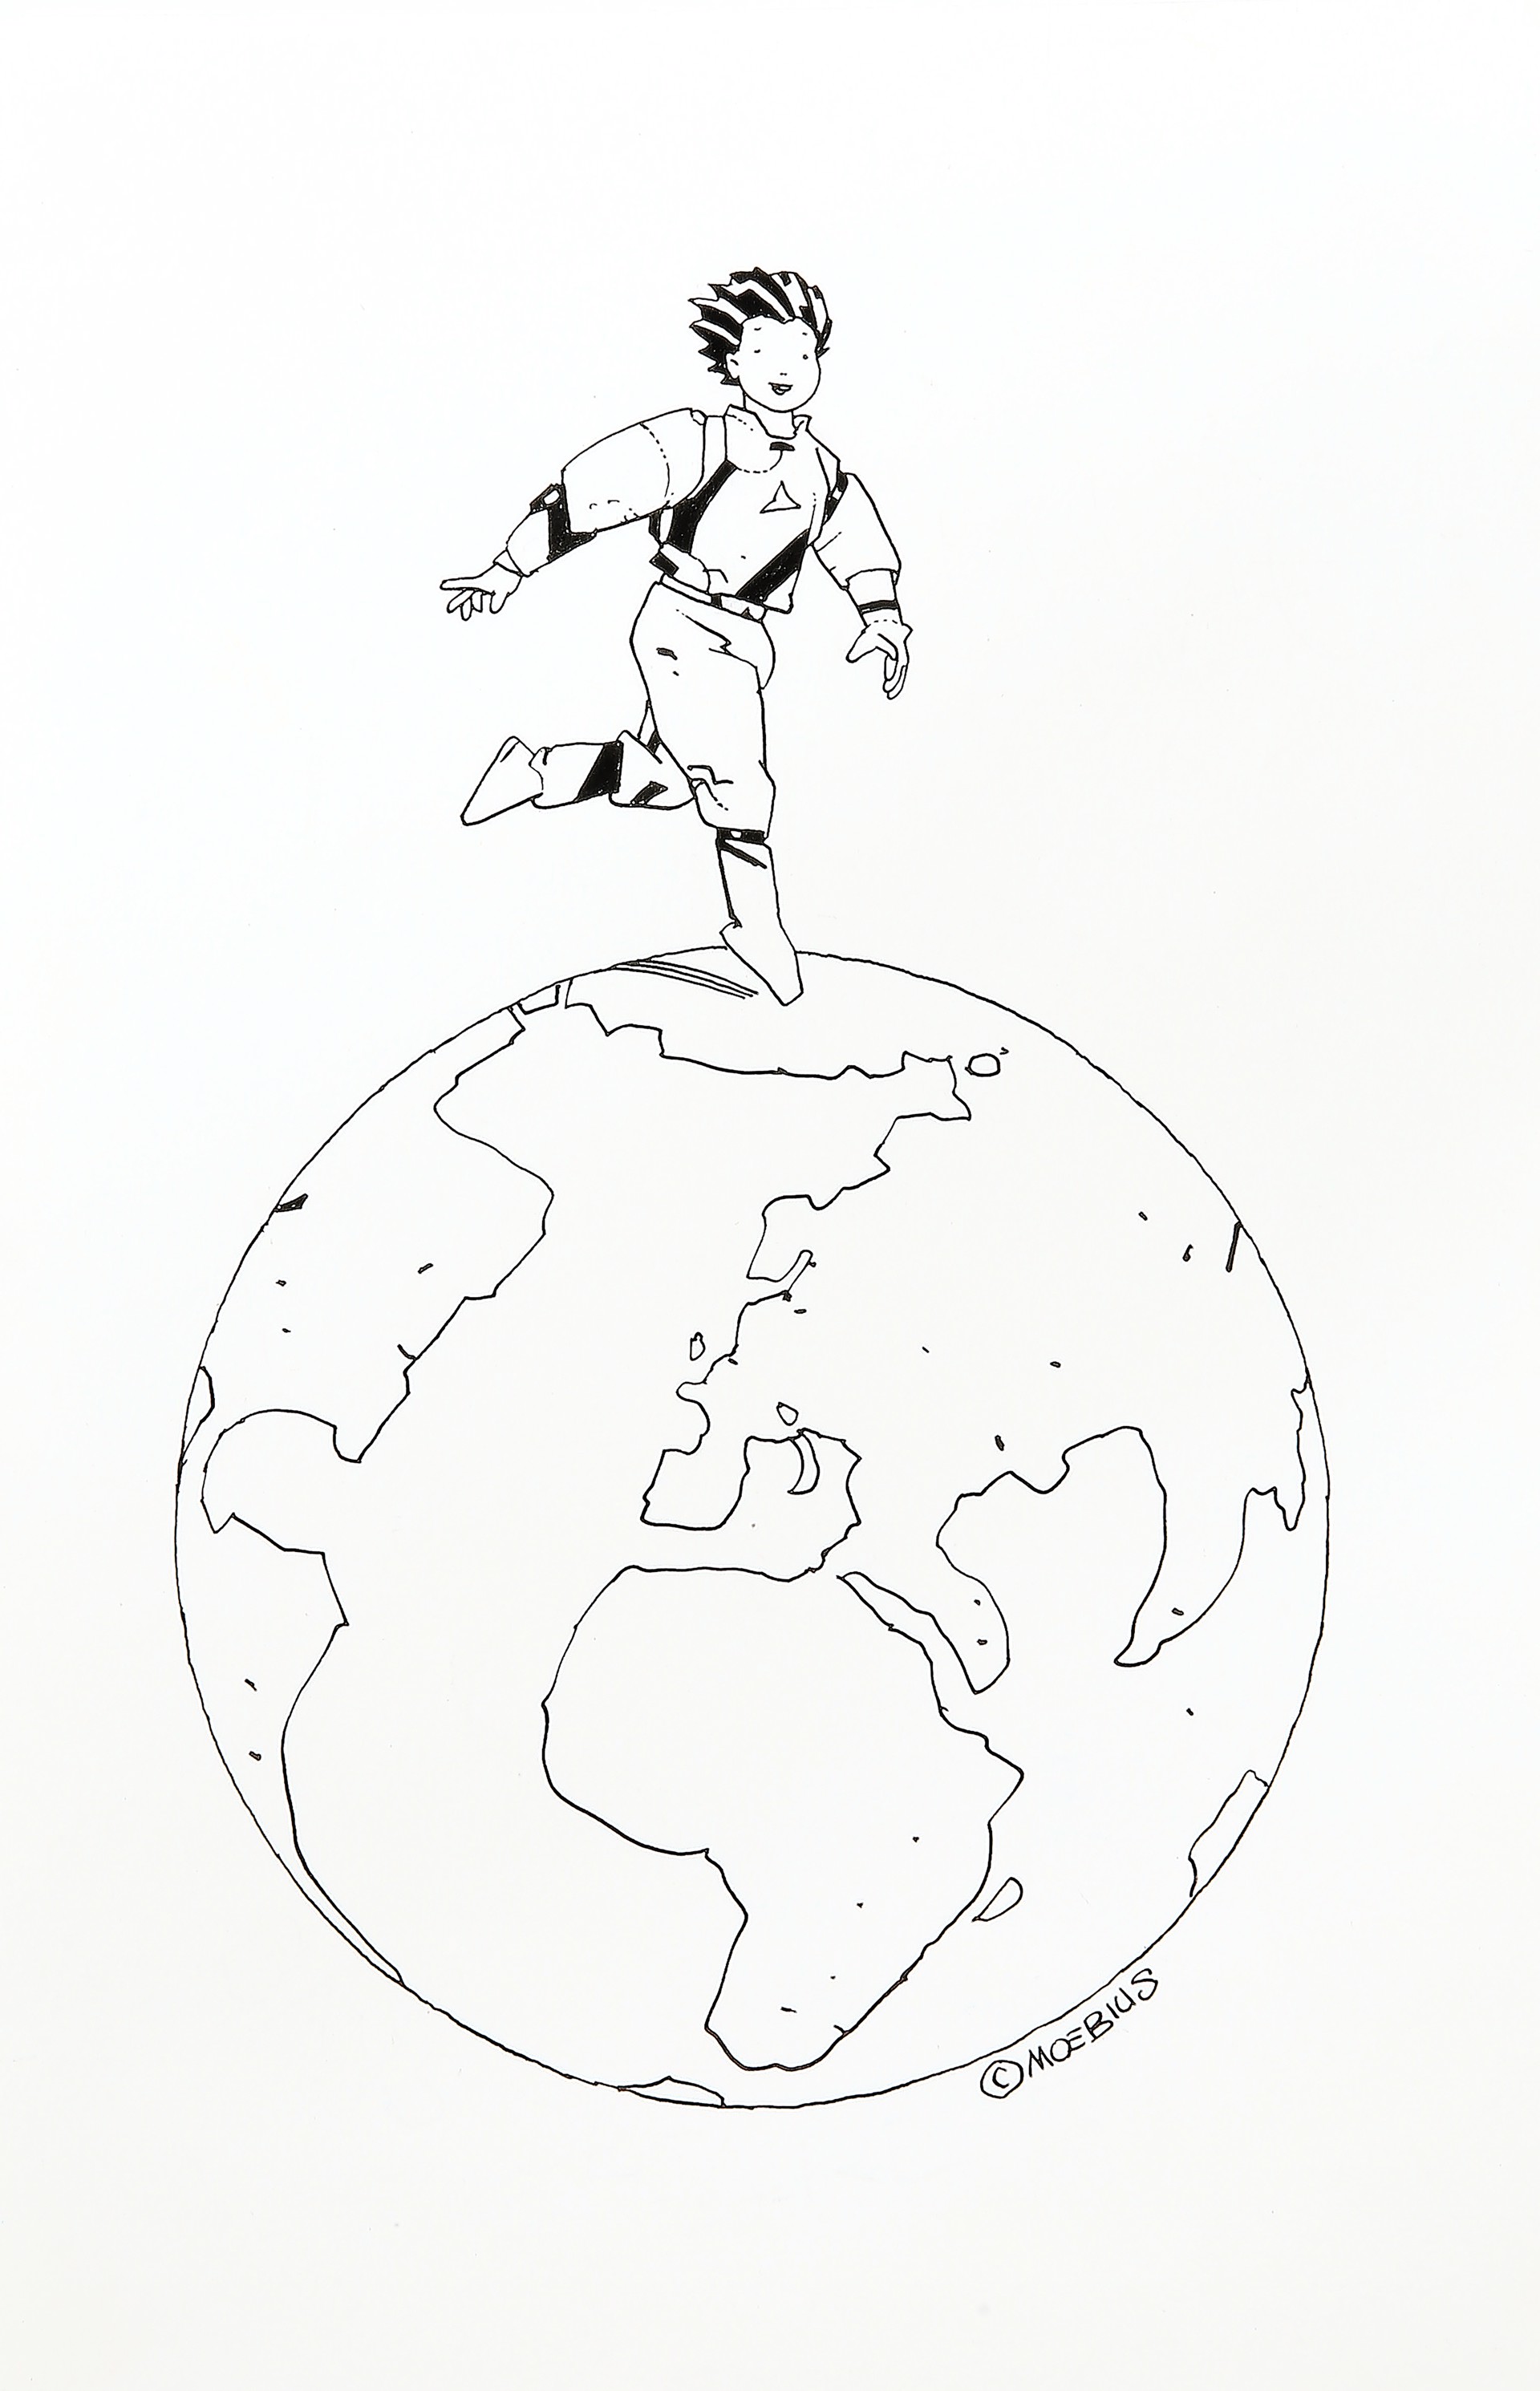 Untitled (Boy on Globe) by Jean Giraud (Moebius)